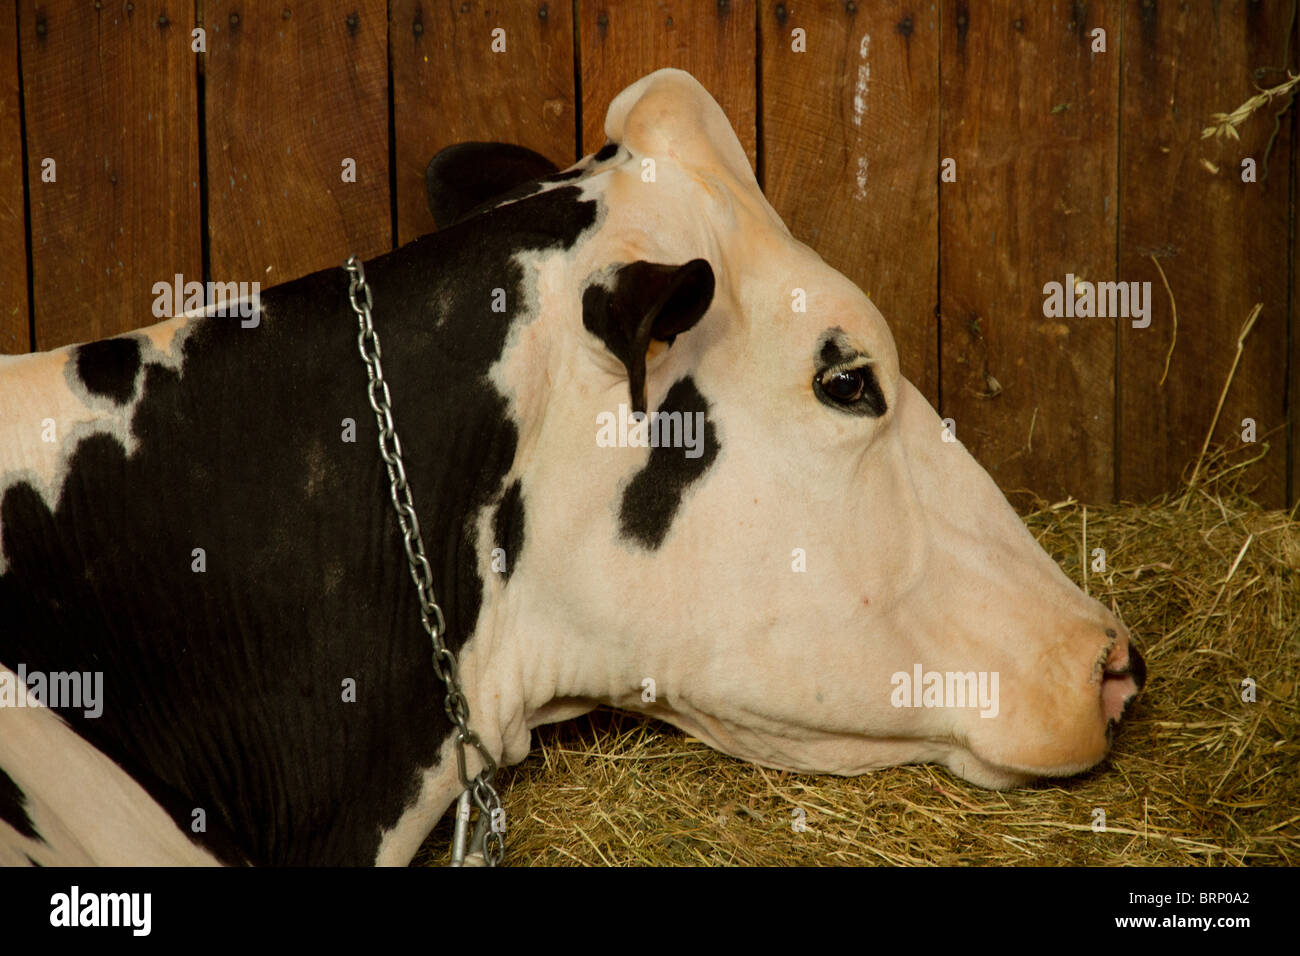 Holstein cow's head Stock Photo